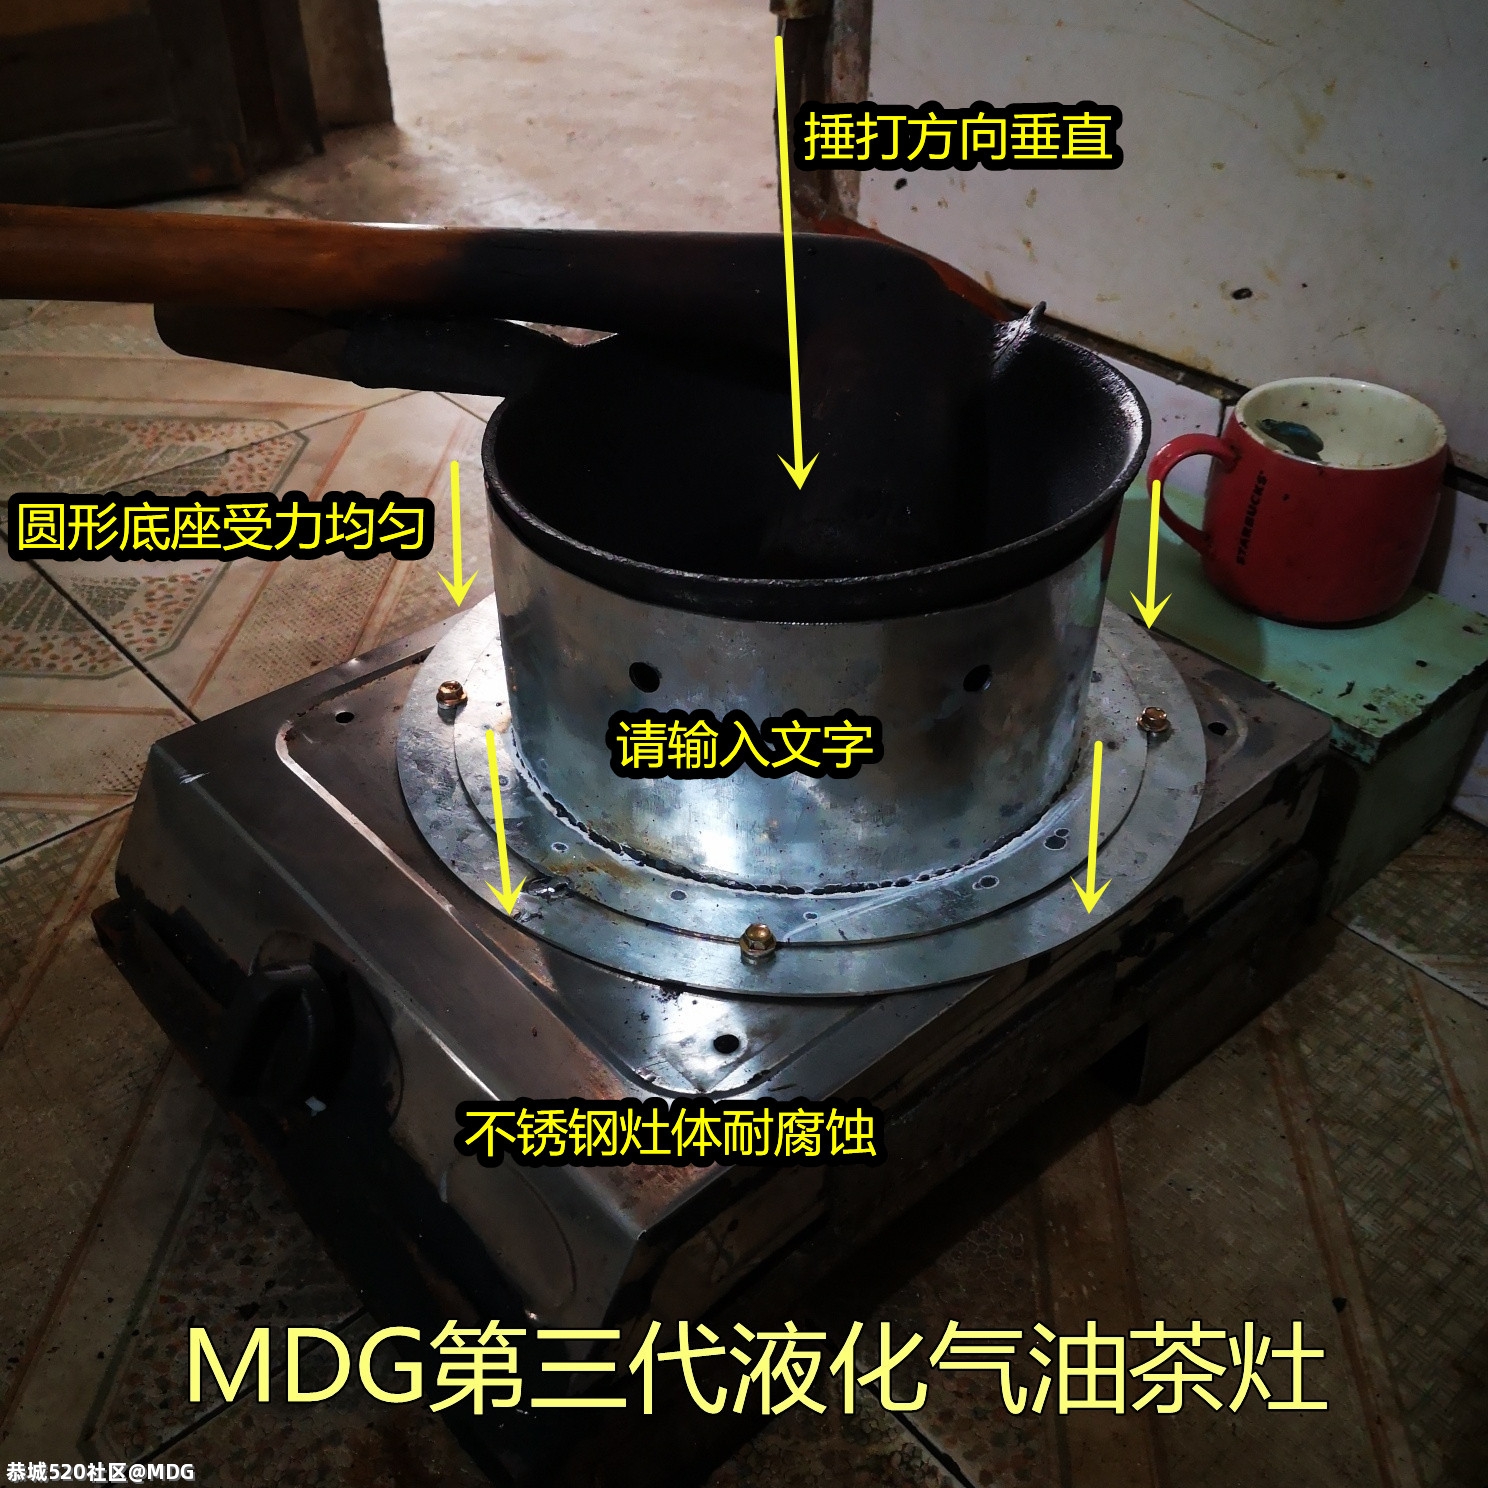 MDG第三代液化气油茶灶918 / 作者:MDG / 帖子ID:284086